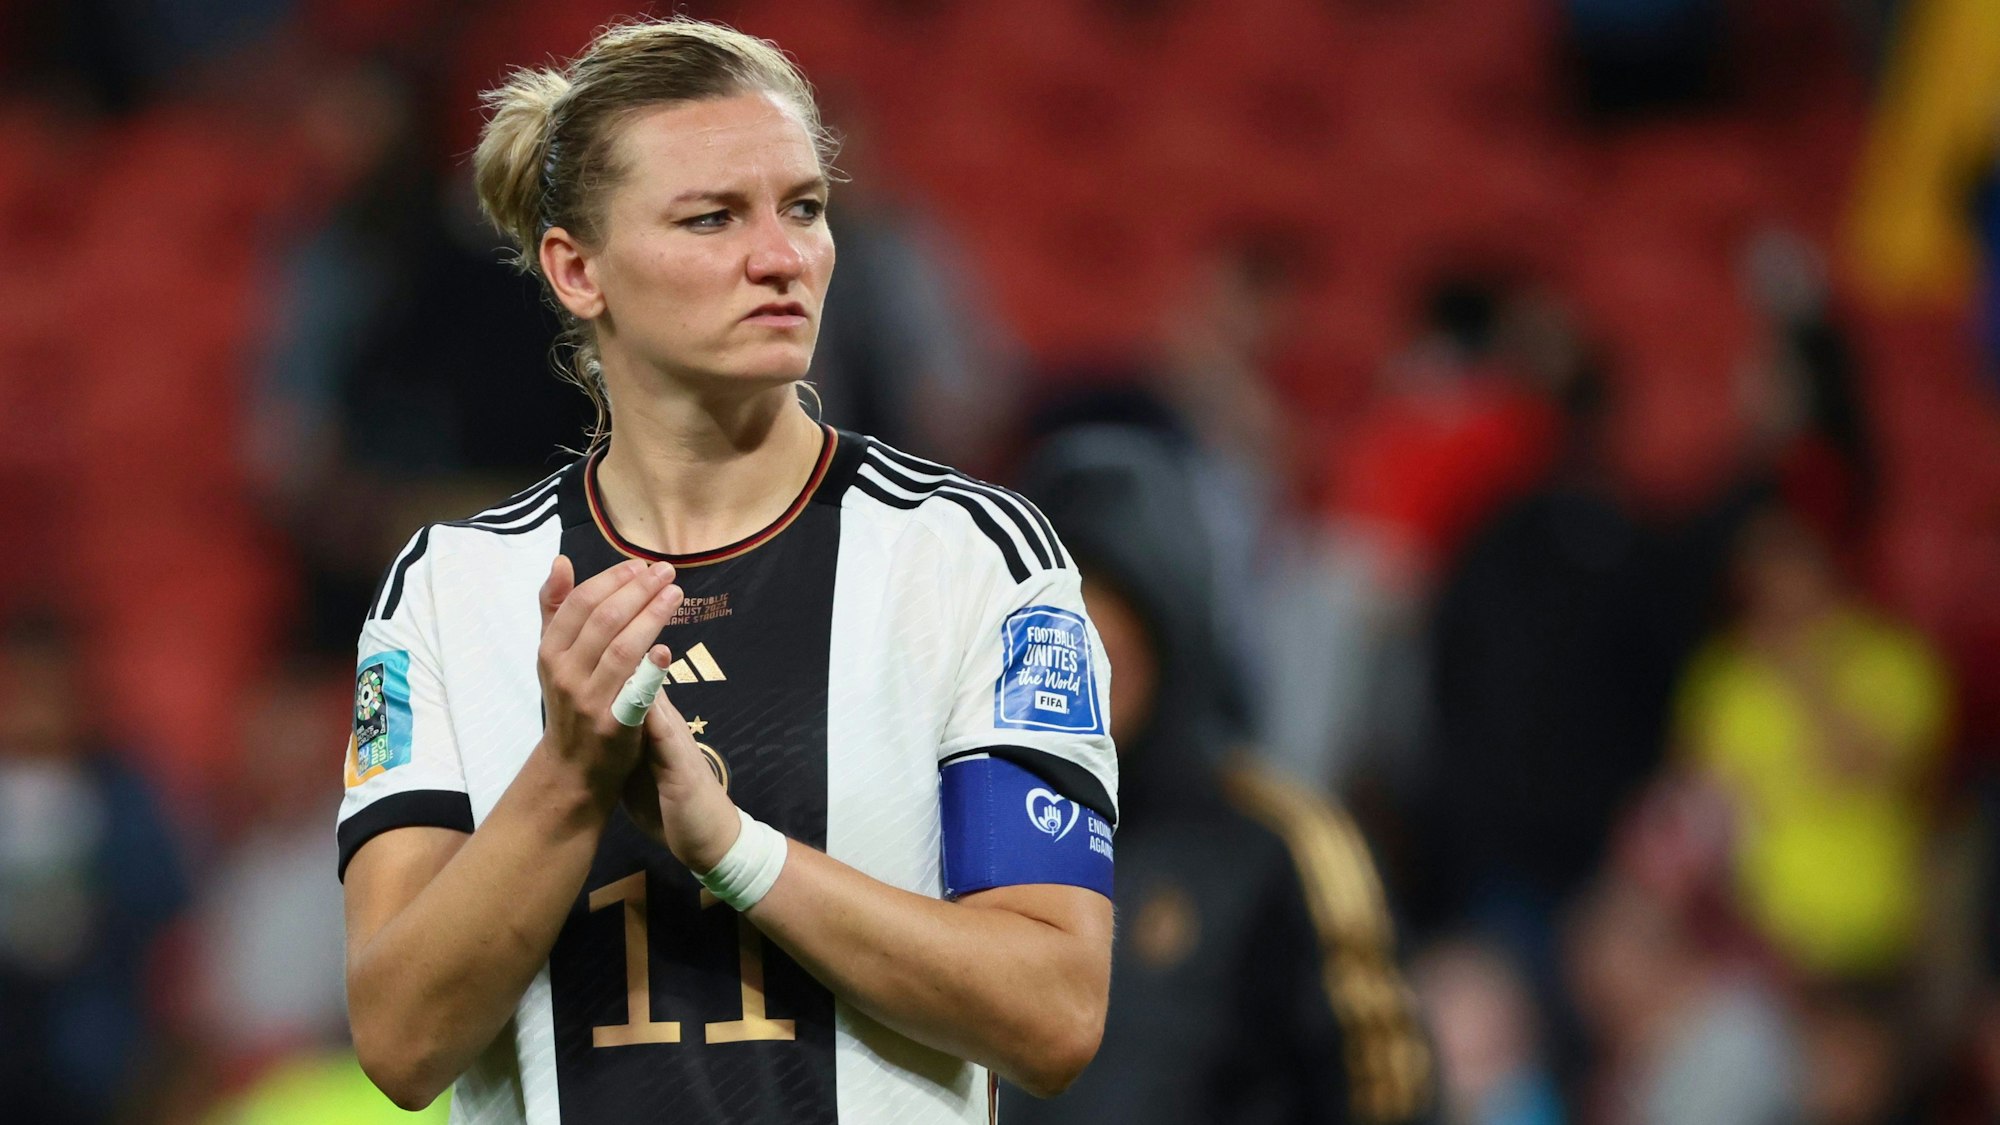 Alexandra Popp klatscht nach dem Deutschland-Aus bei der Frauen-WM enttäuscht in Richtung Fans.